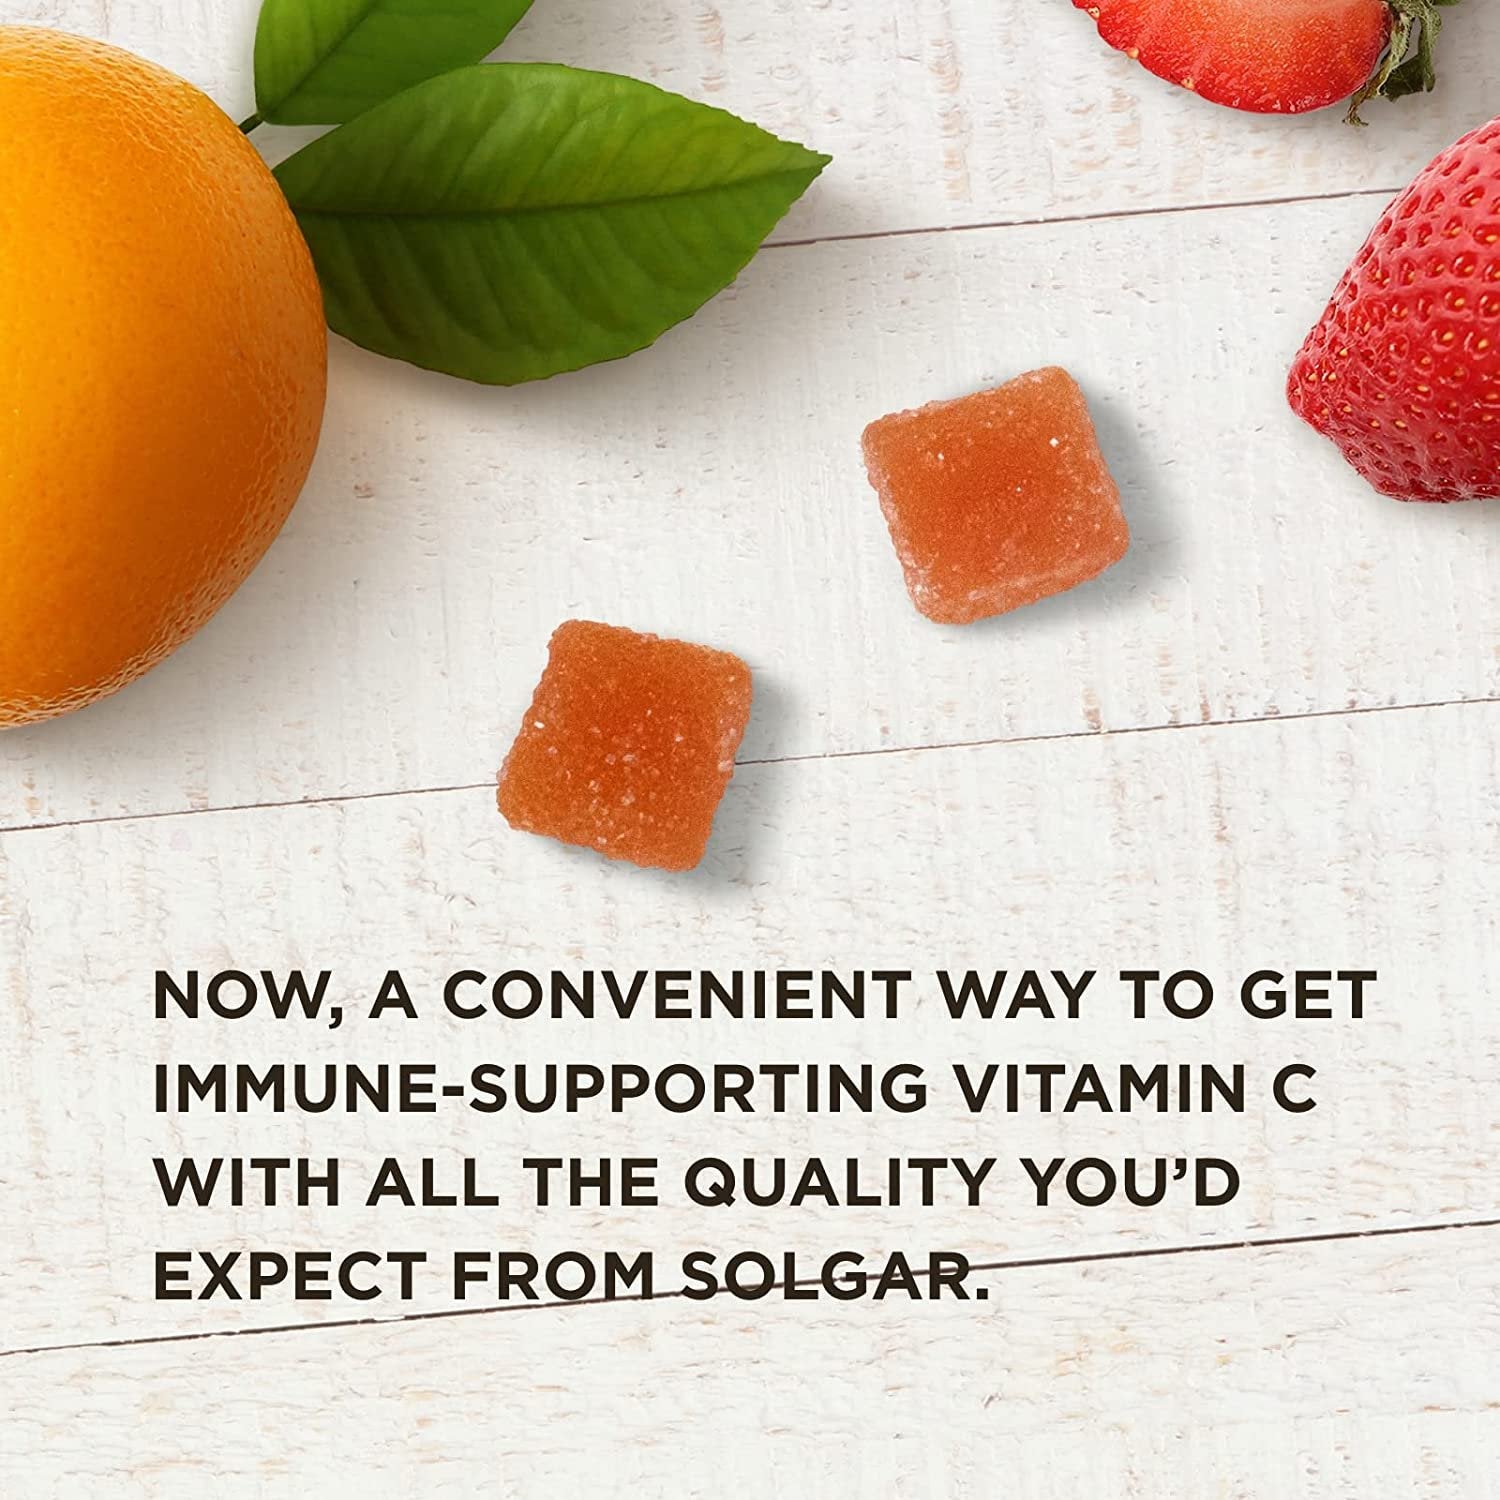 Solgar Adult Vitamin C Gummies 500mg Strawberry Orange 120ct